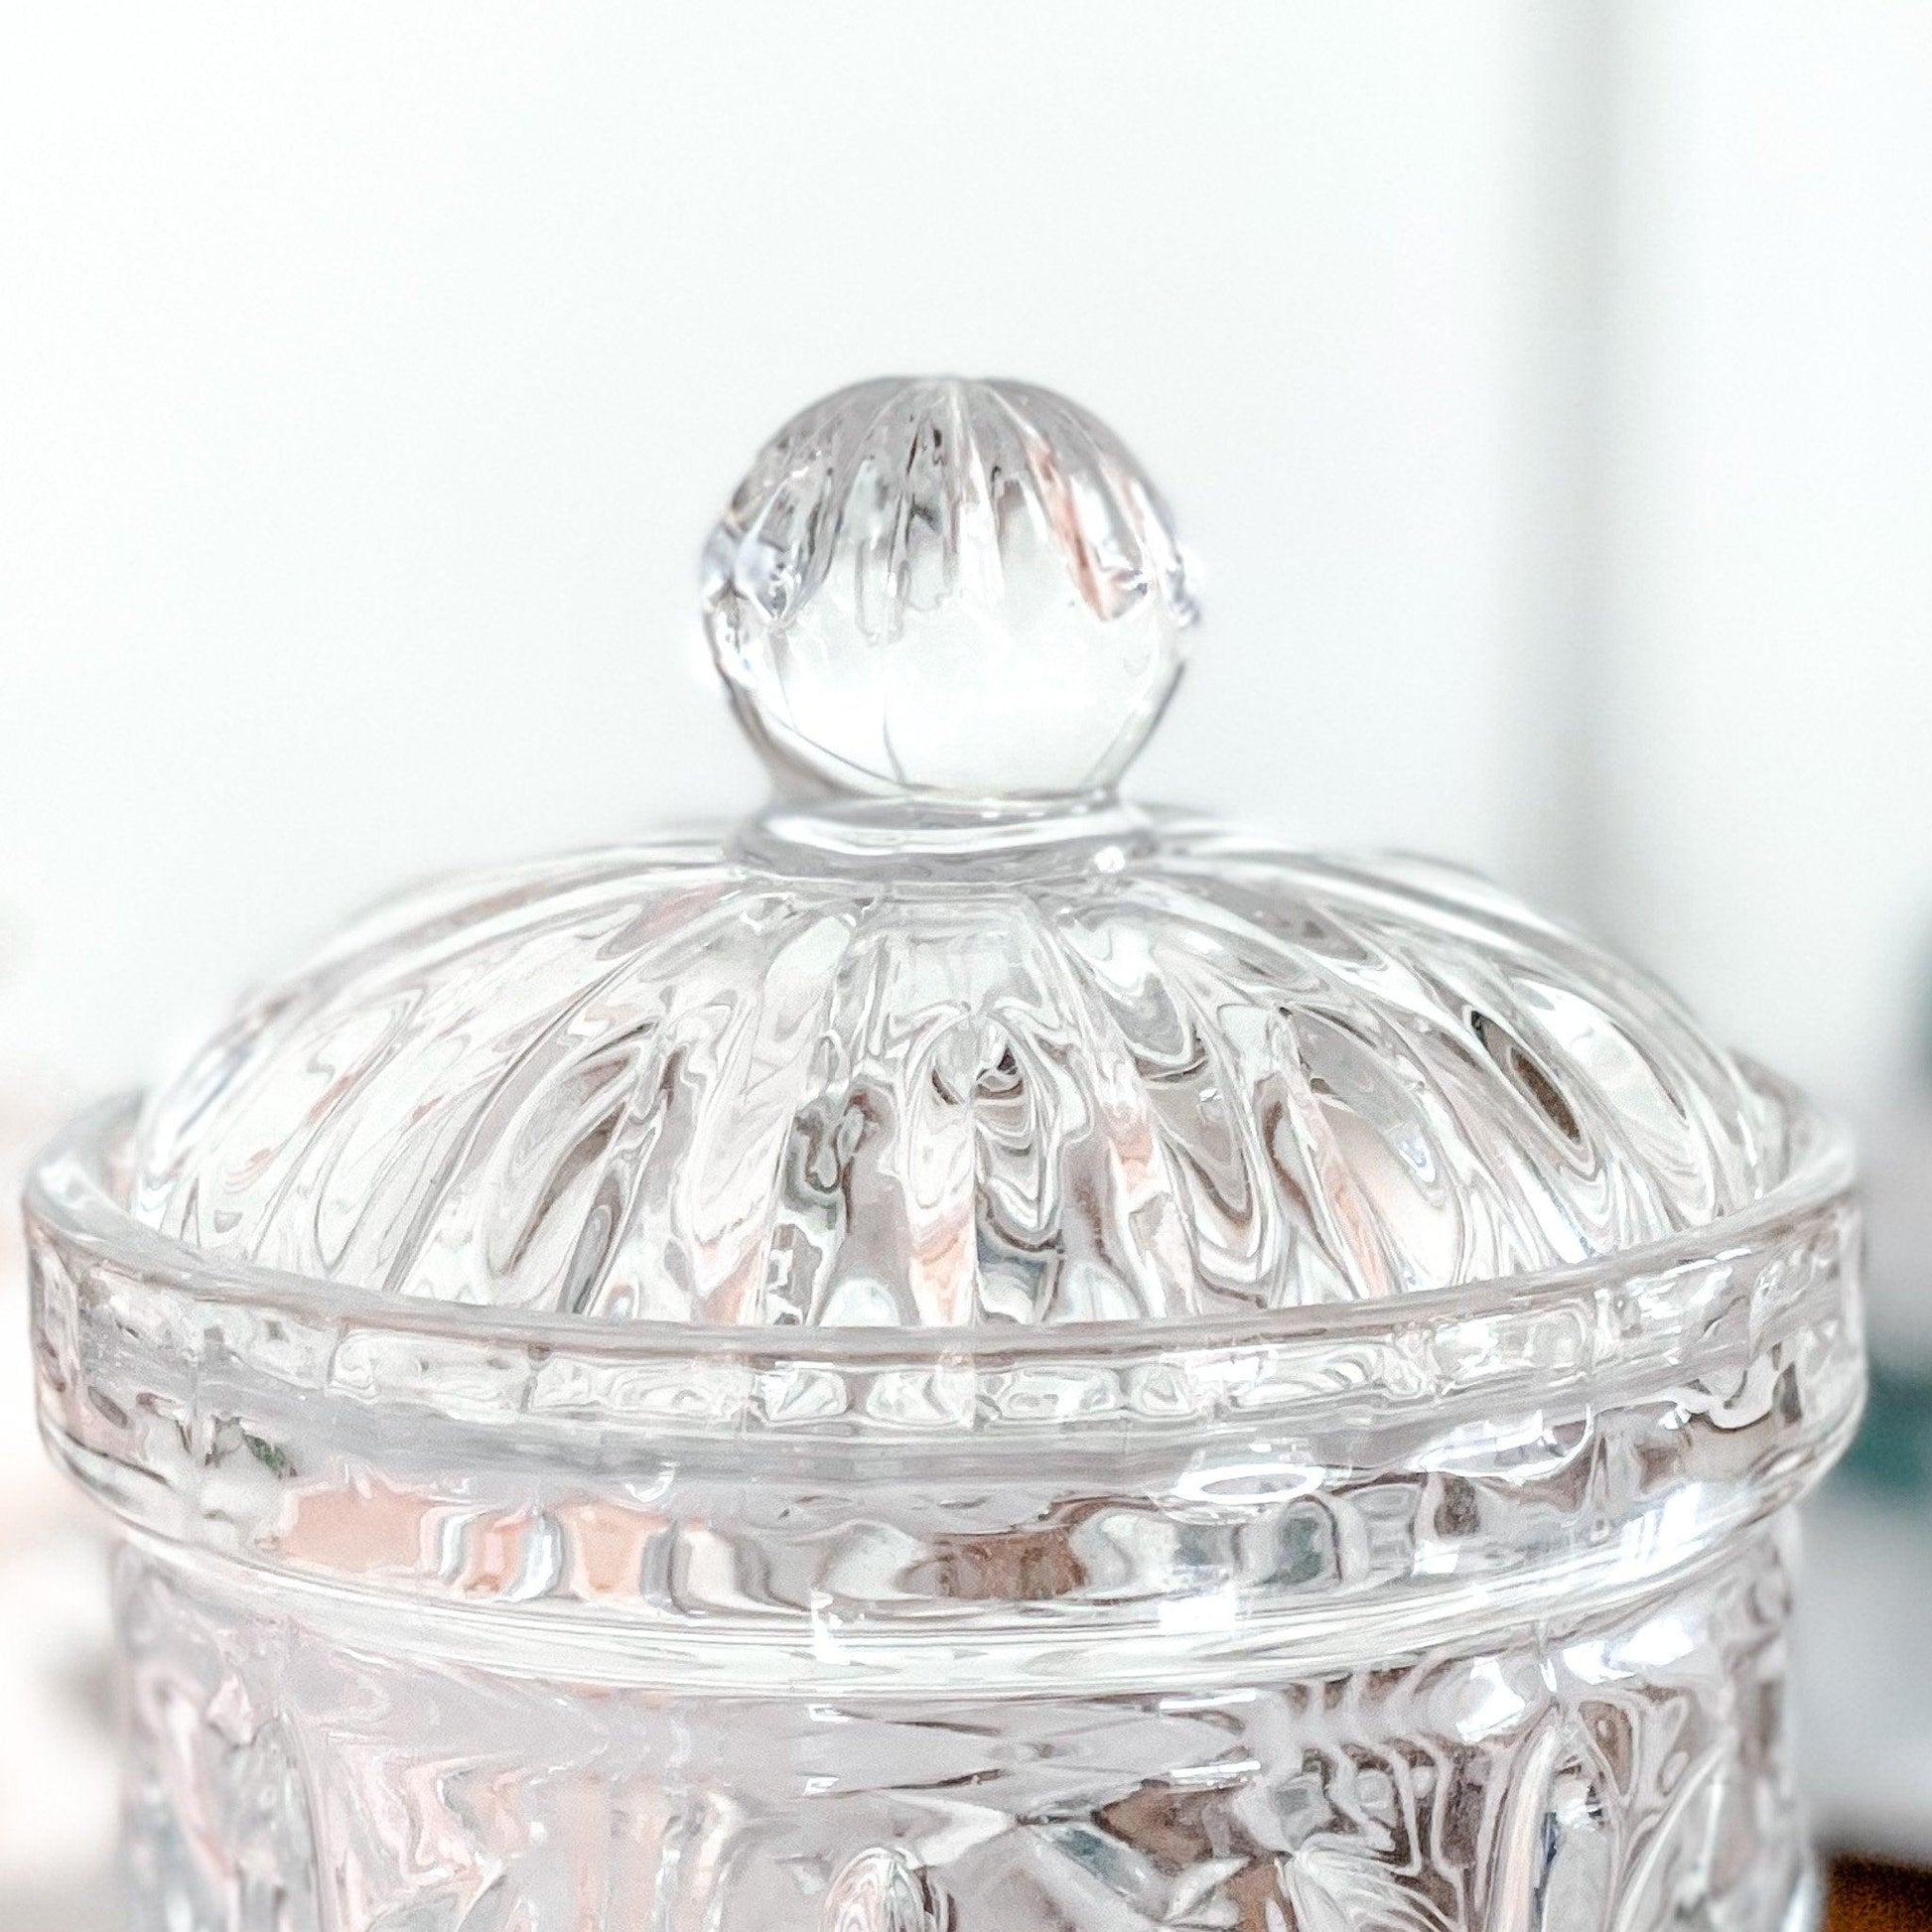 Scented Candle in Vintage Crystal Biscuit Jar - RetroWix 